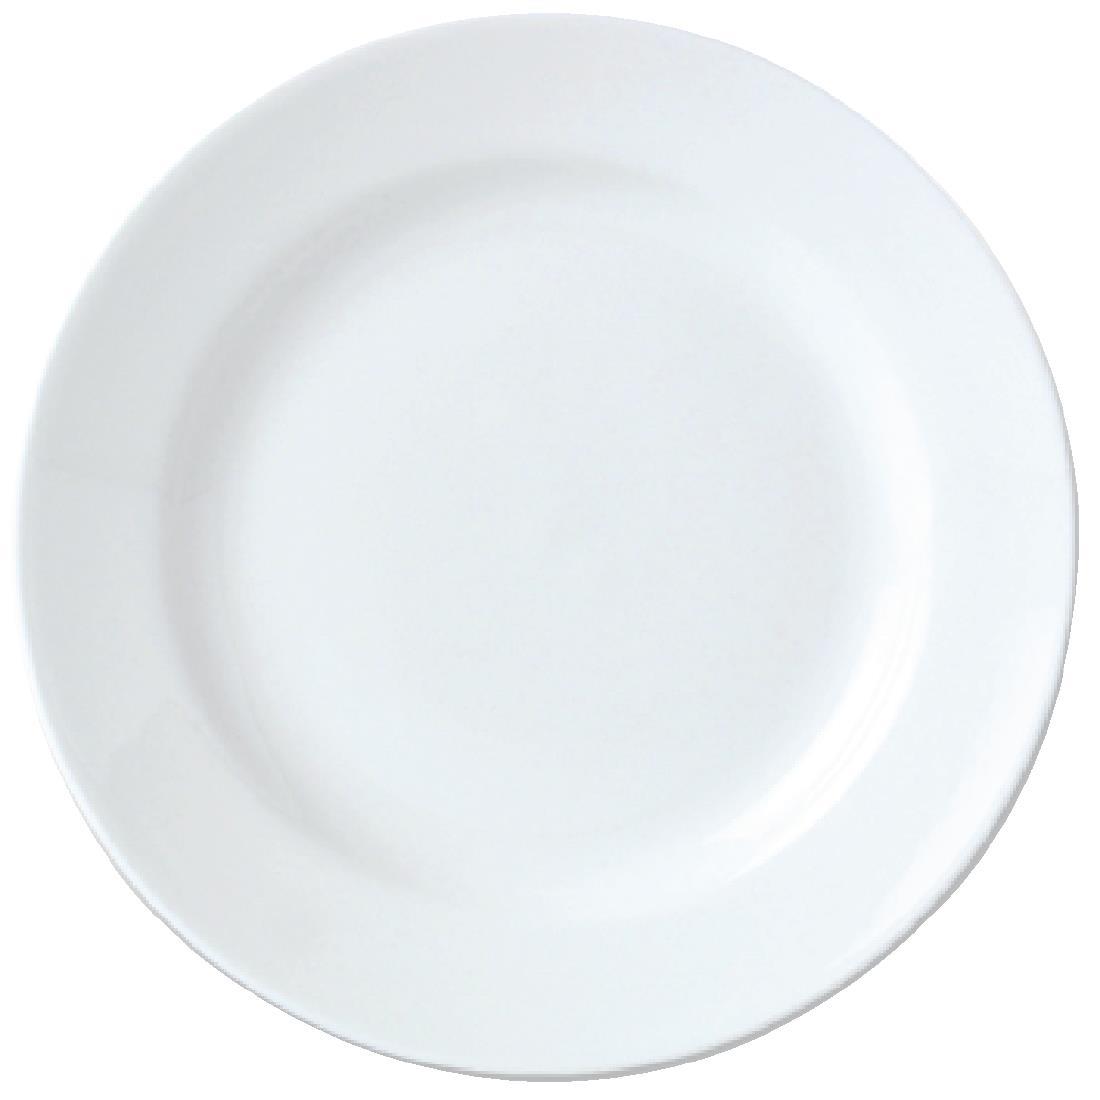 Steelite Simplicity White Harmony Plates 320mm (Pack of 6) - V9248  - 1